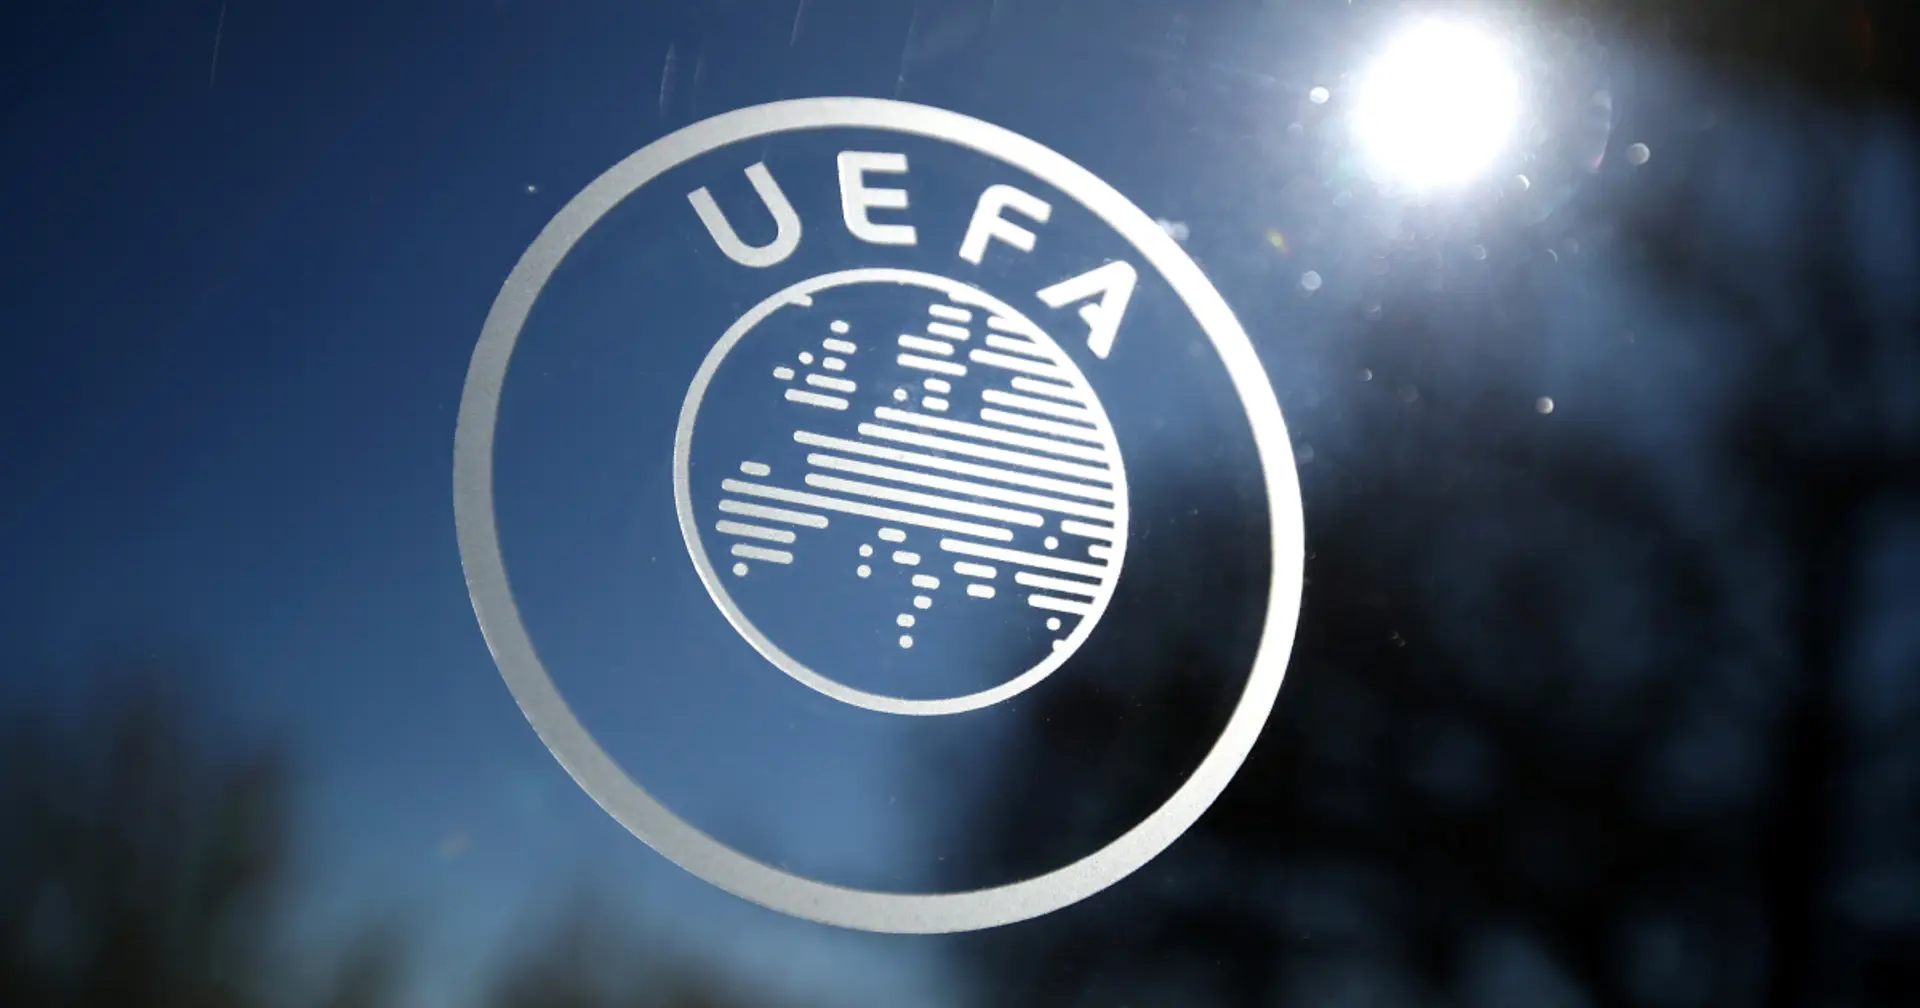 UEFA postpone key Champions League clash after fan dies in brawl